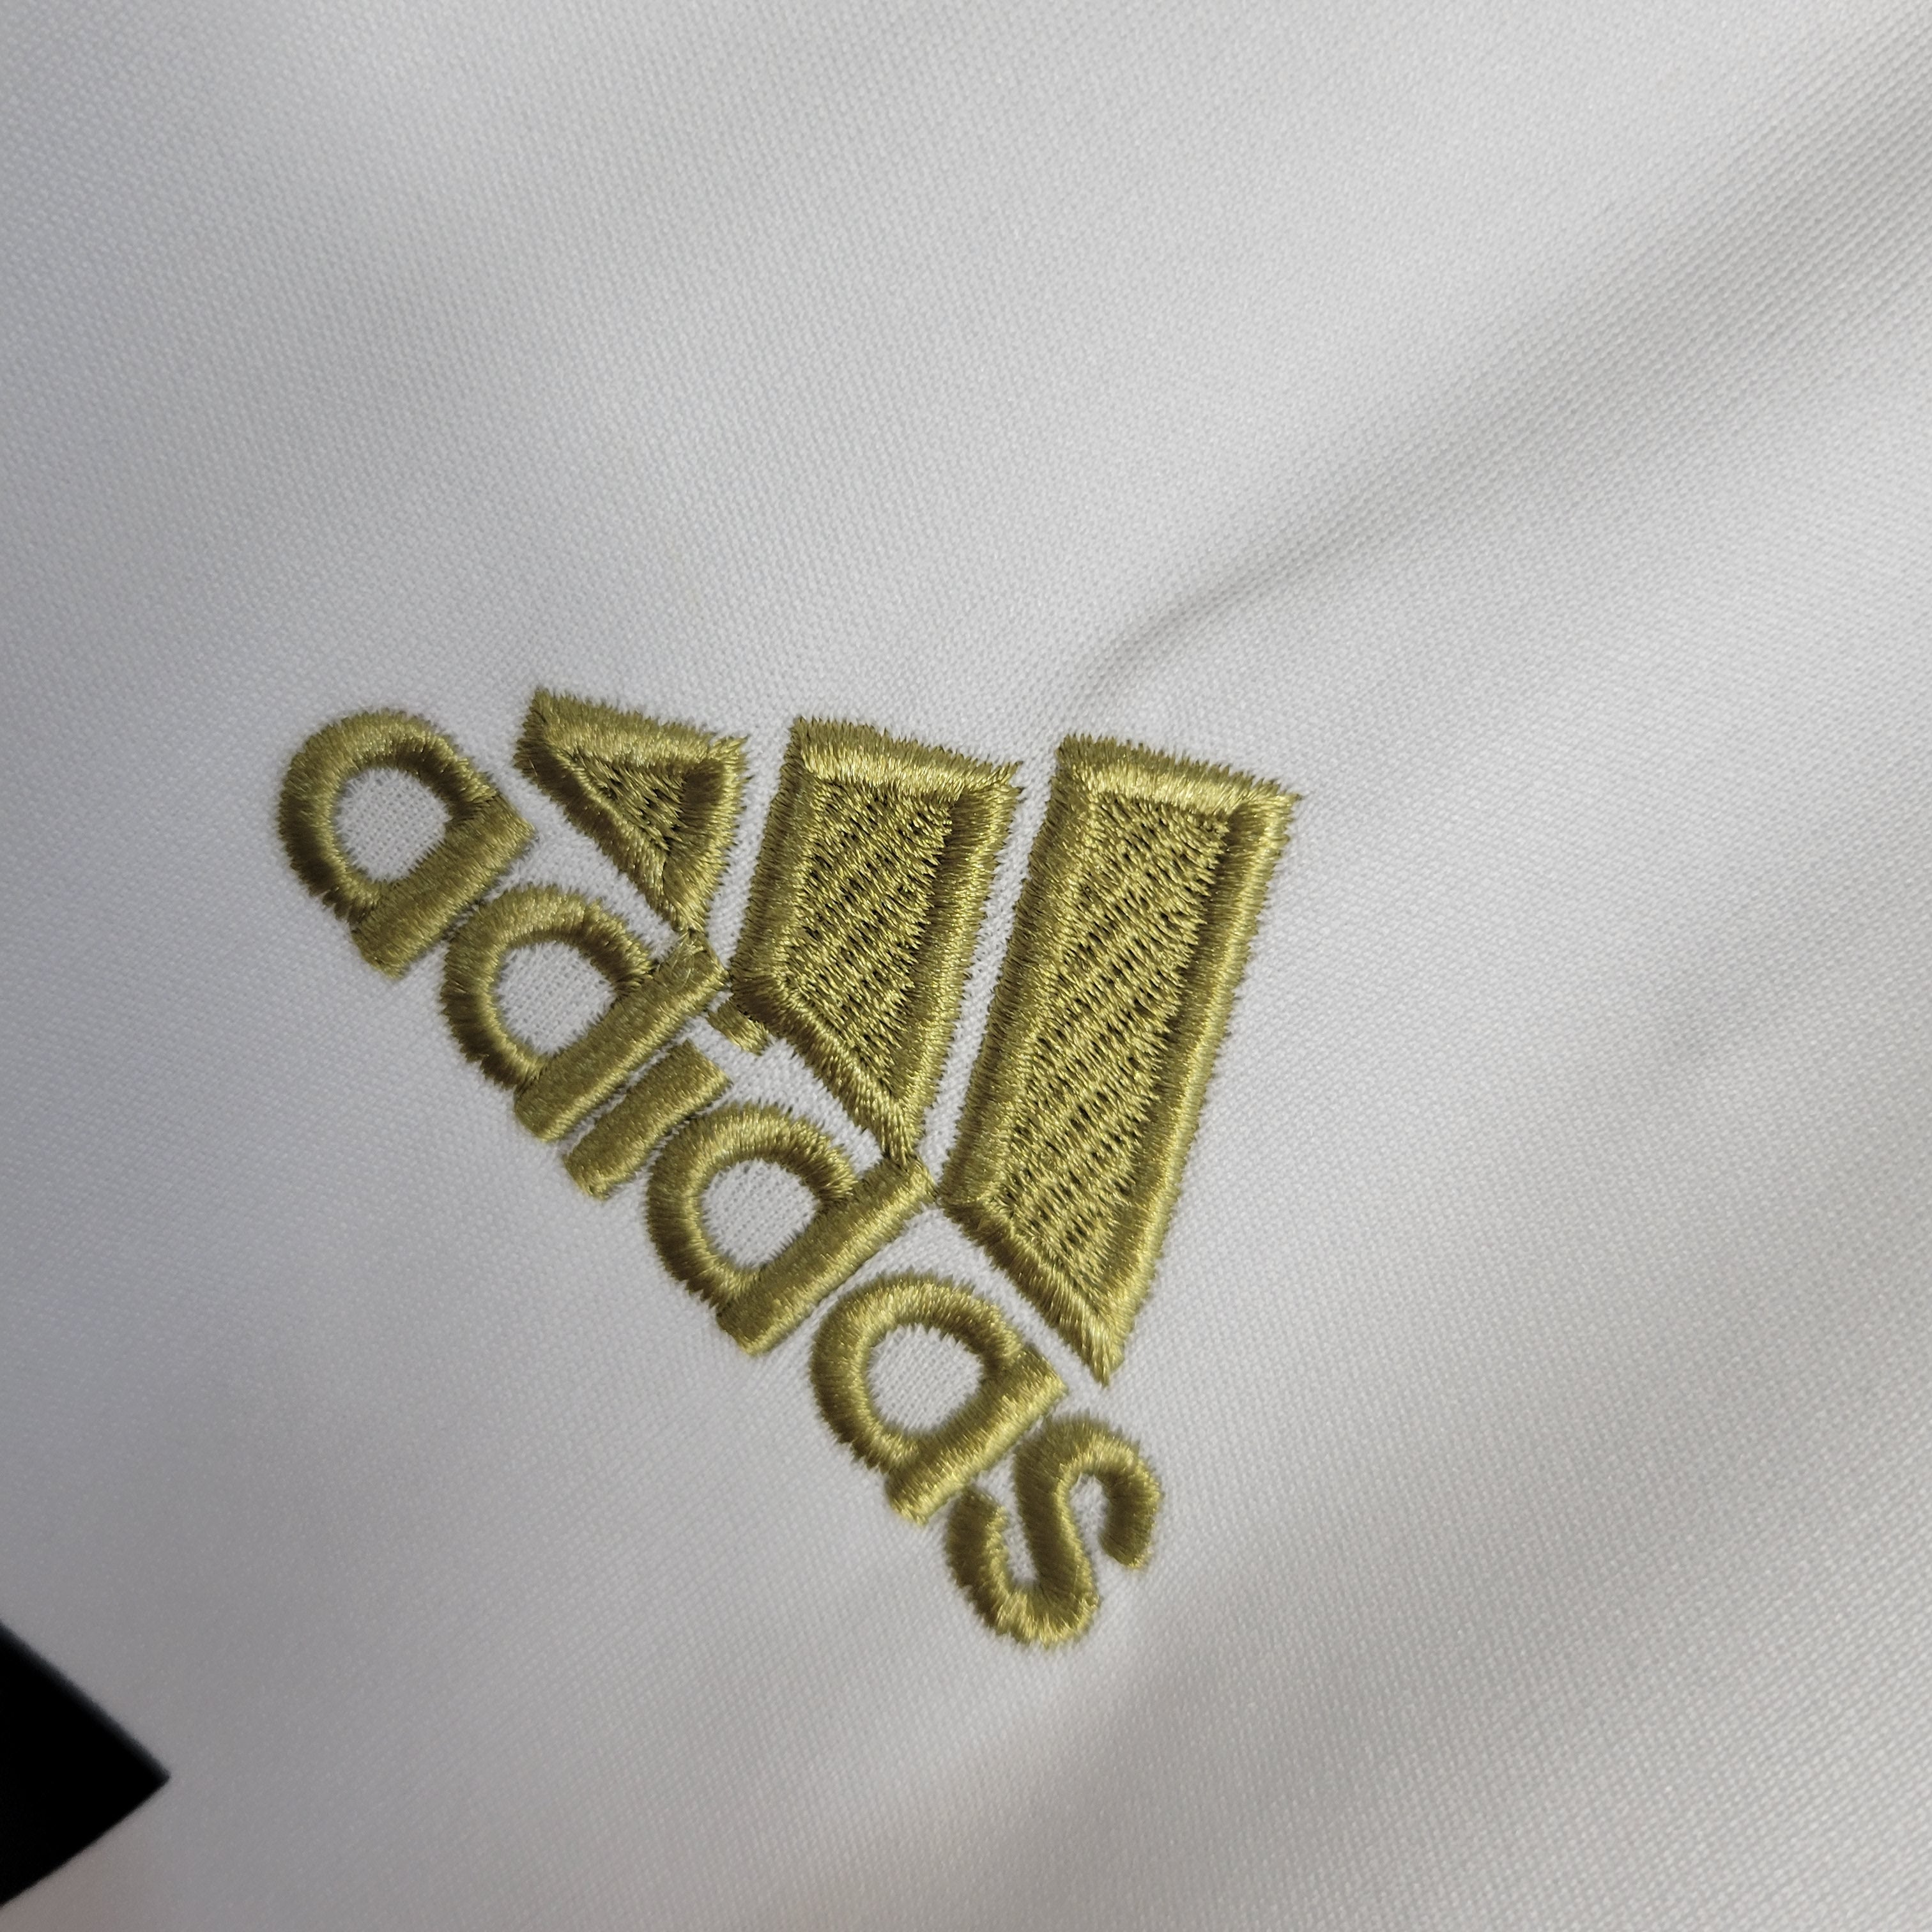 2011 2012 Real Madrid Home Long Sleeve Shirt - That Retro Shirt Store